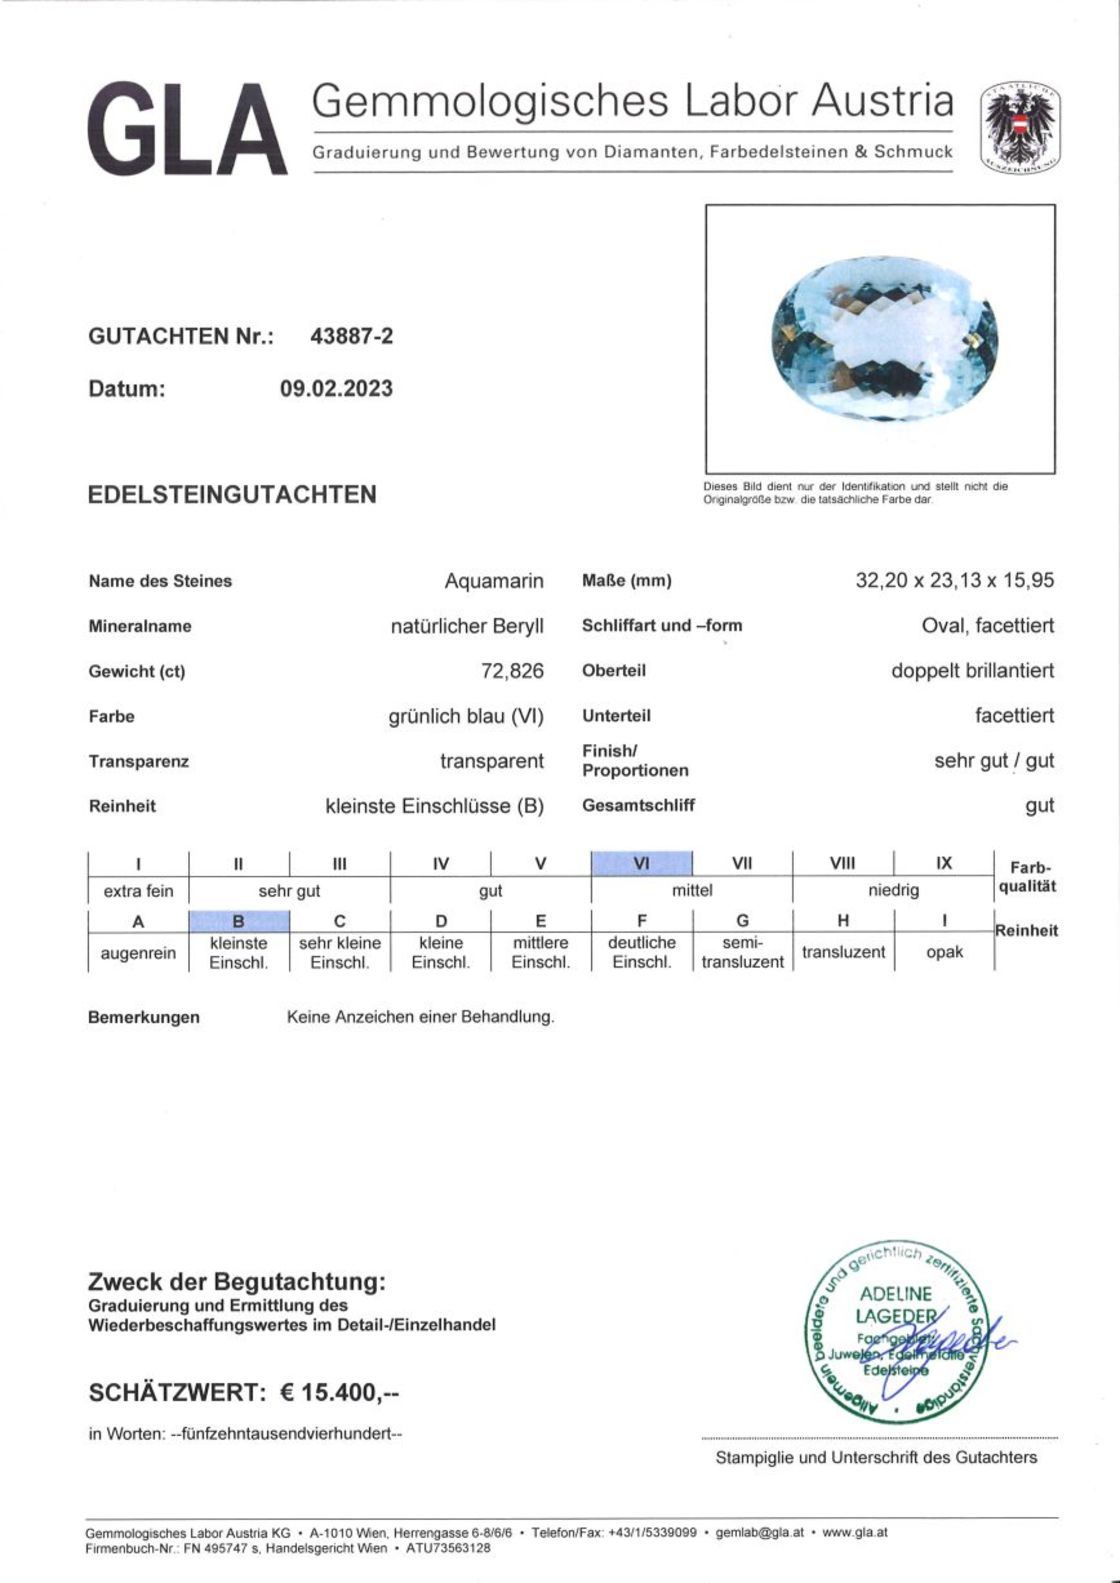 Aquamarin Ovalschilff grünlich-hellblau 72,826 ct